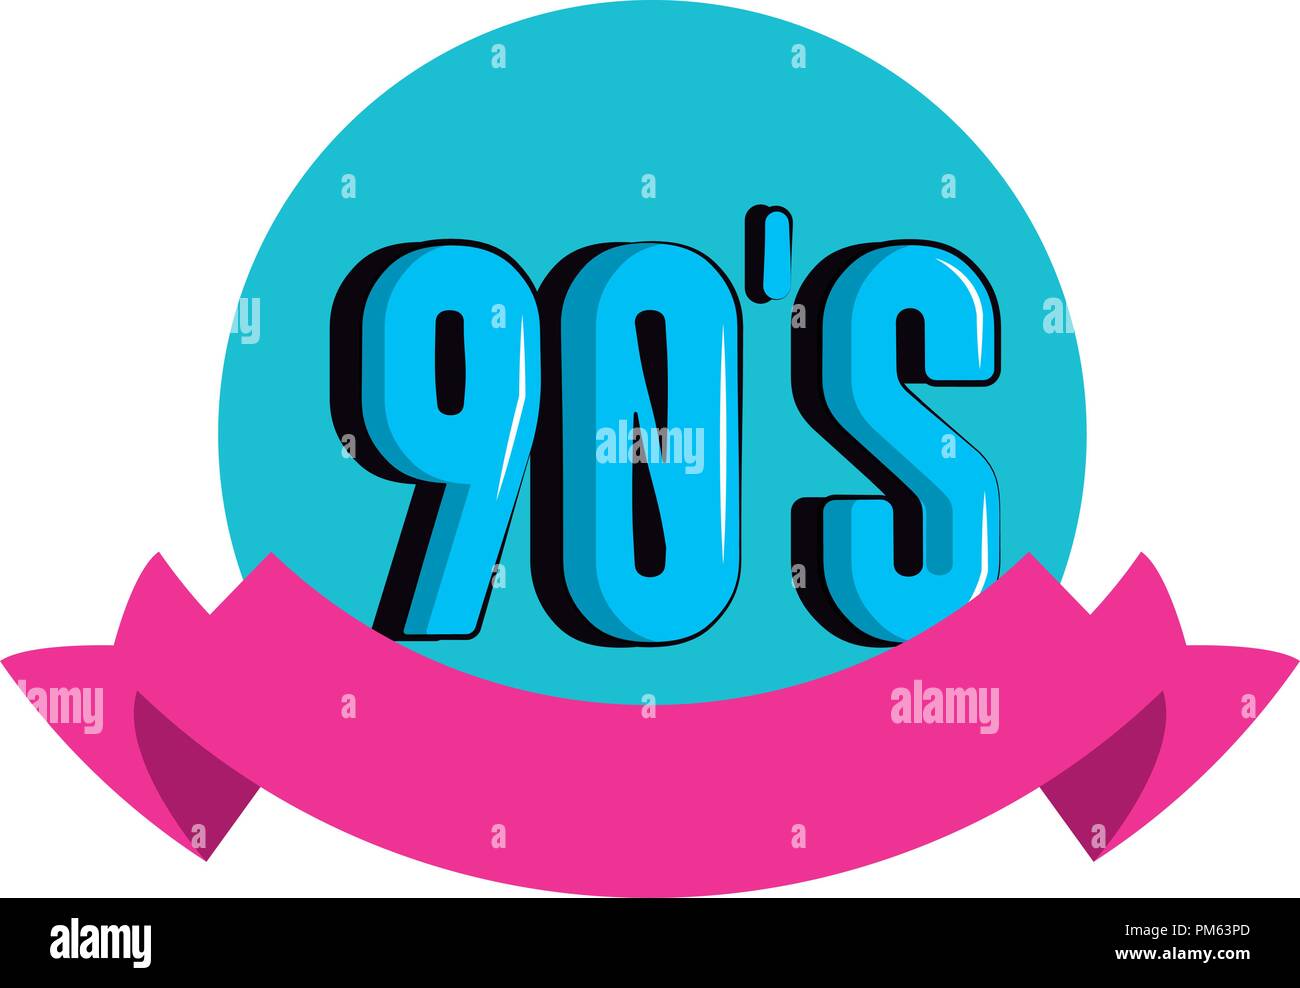 90s retro symbol cartoon round icon Stock Vector